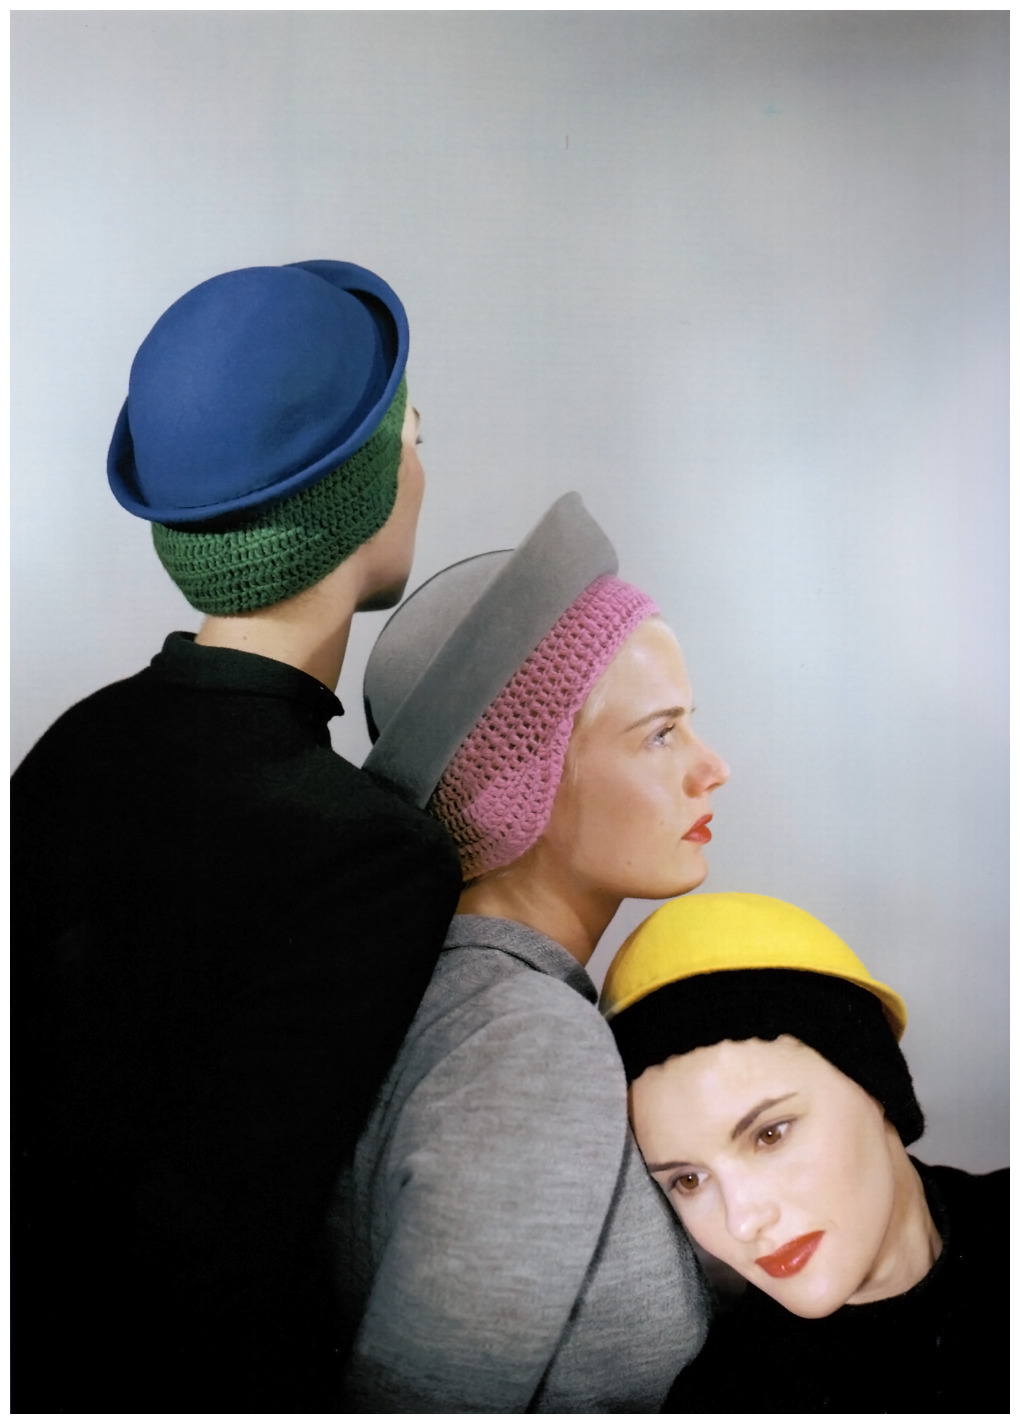 Photo Erwin Blumenfeld Vogue 1944